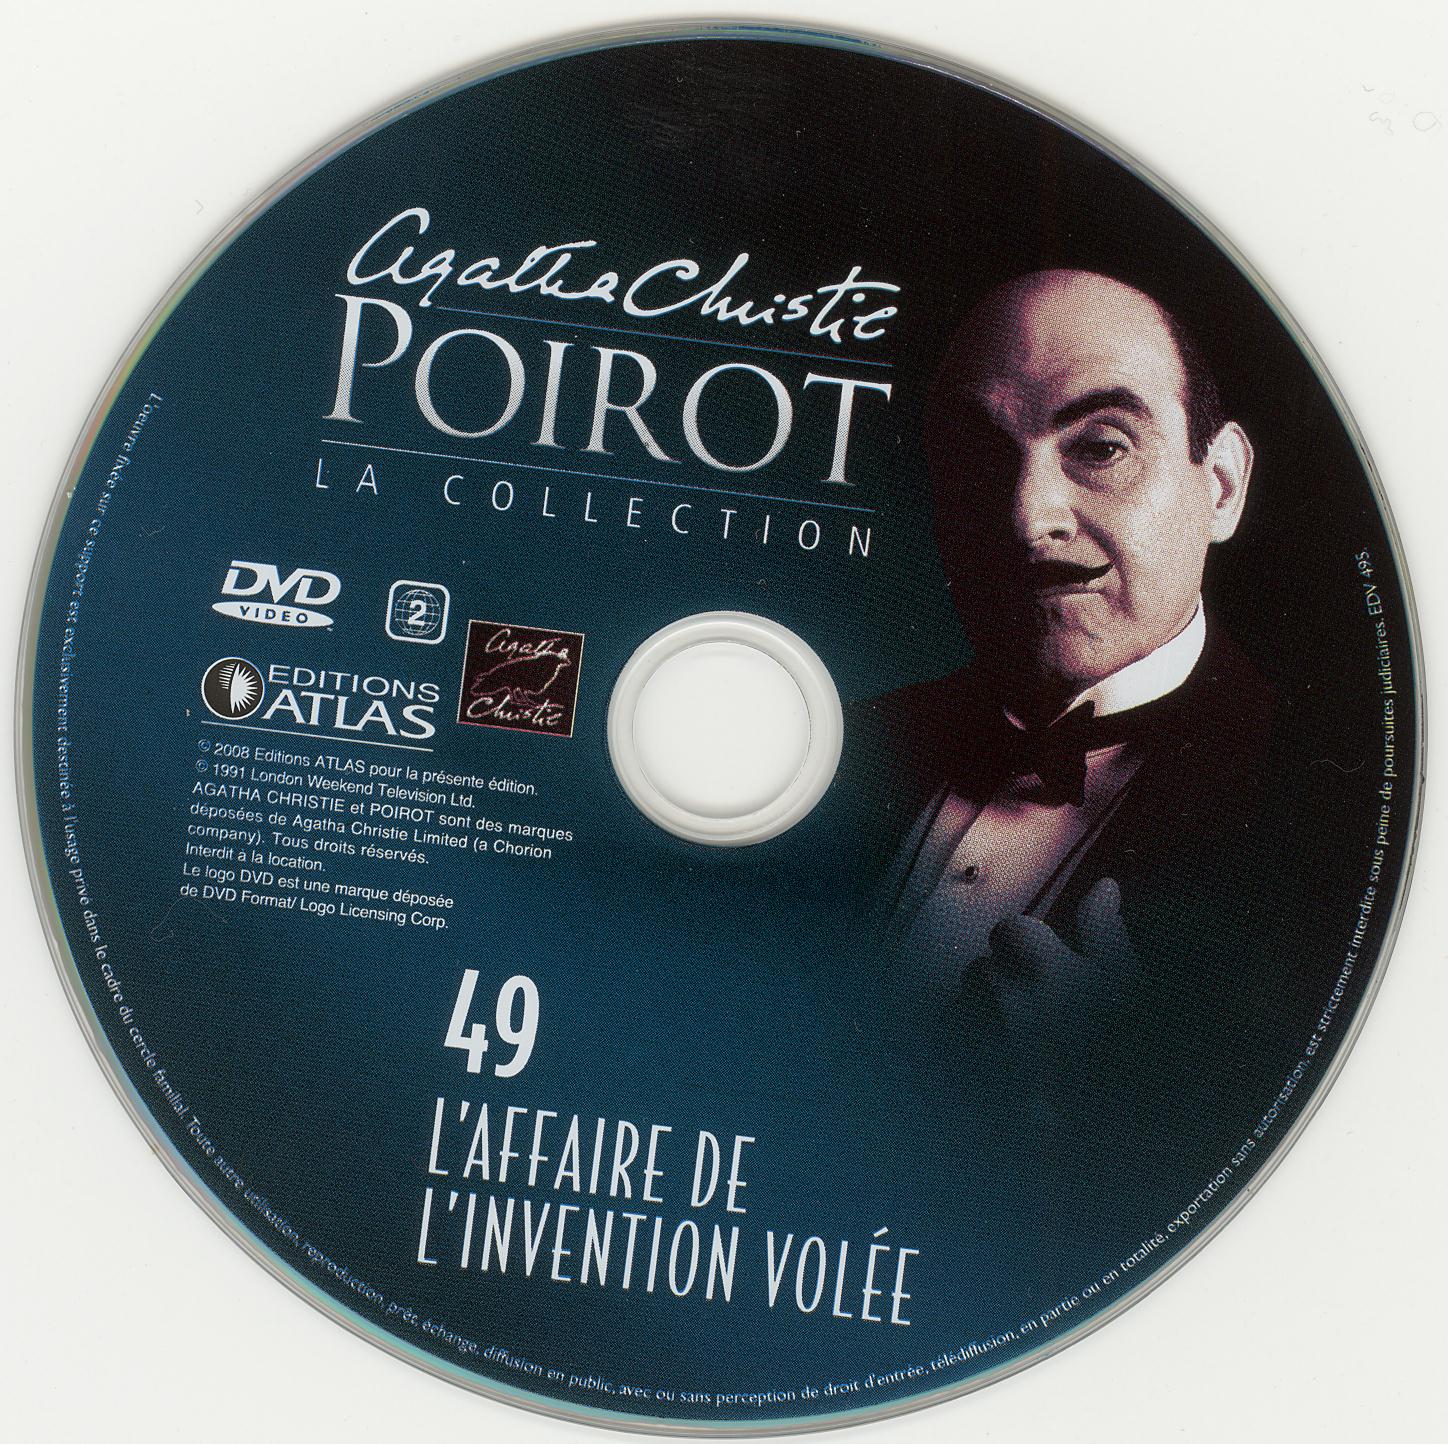 Hercule Poirot vol 49